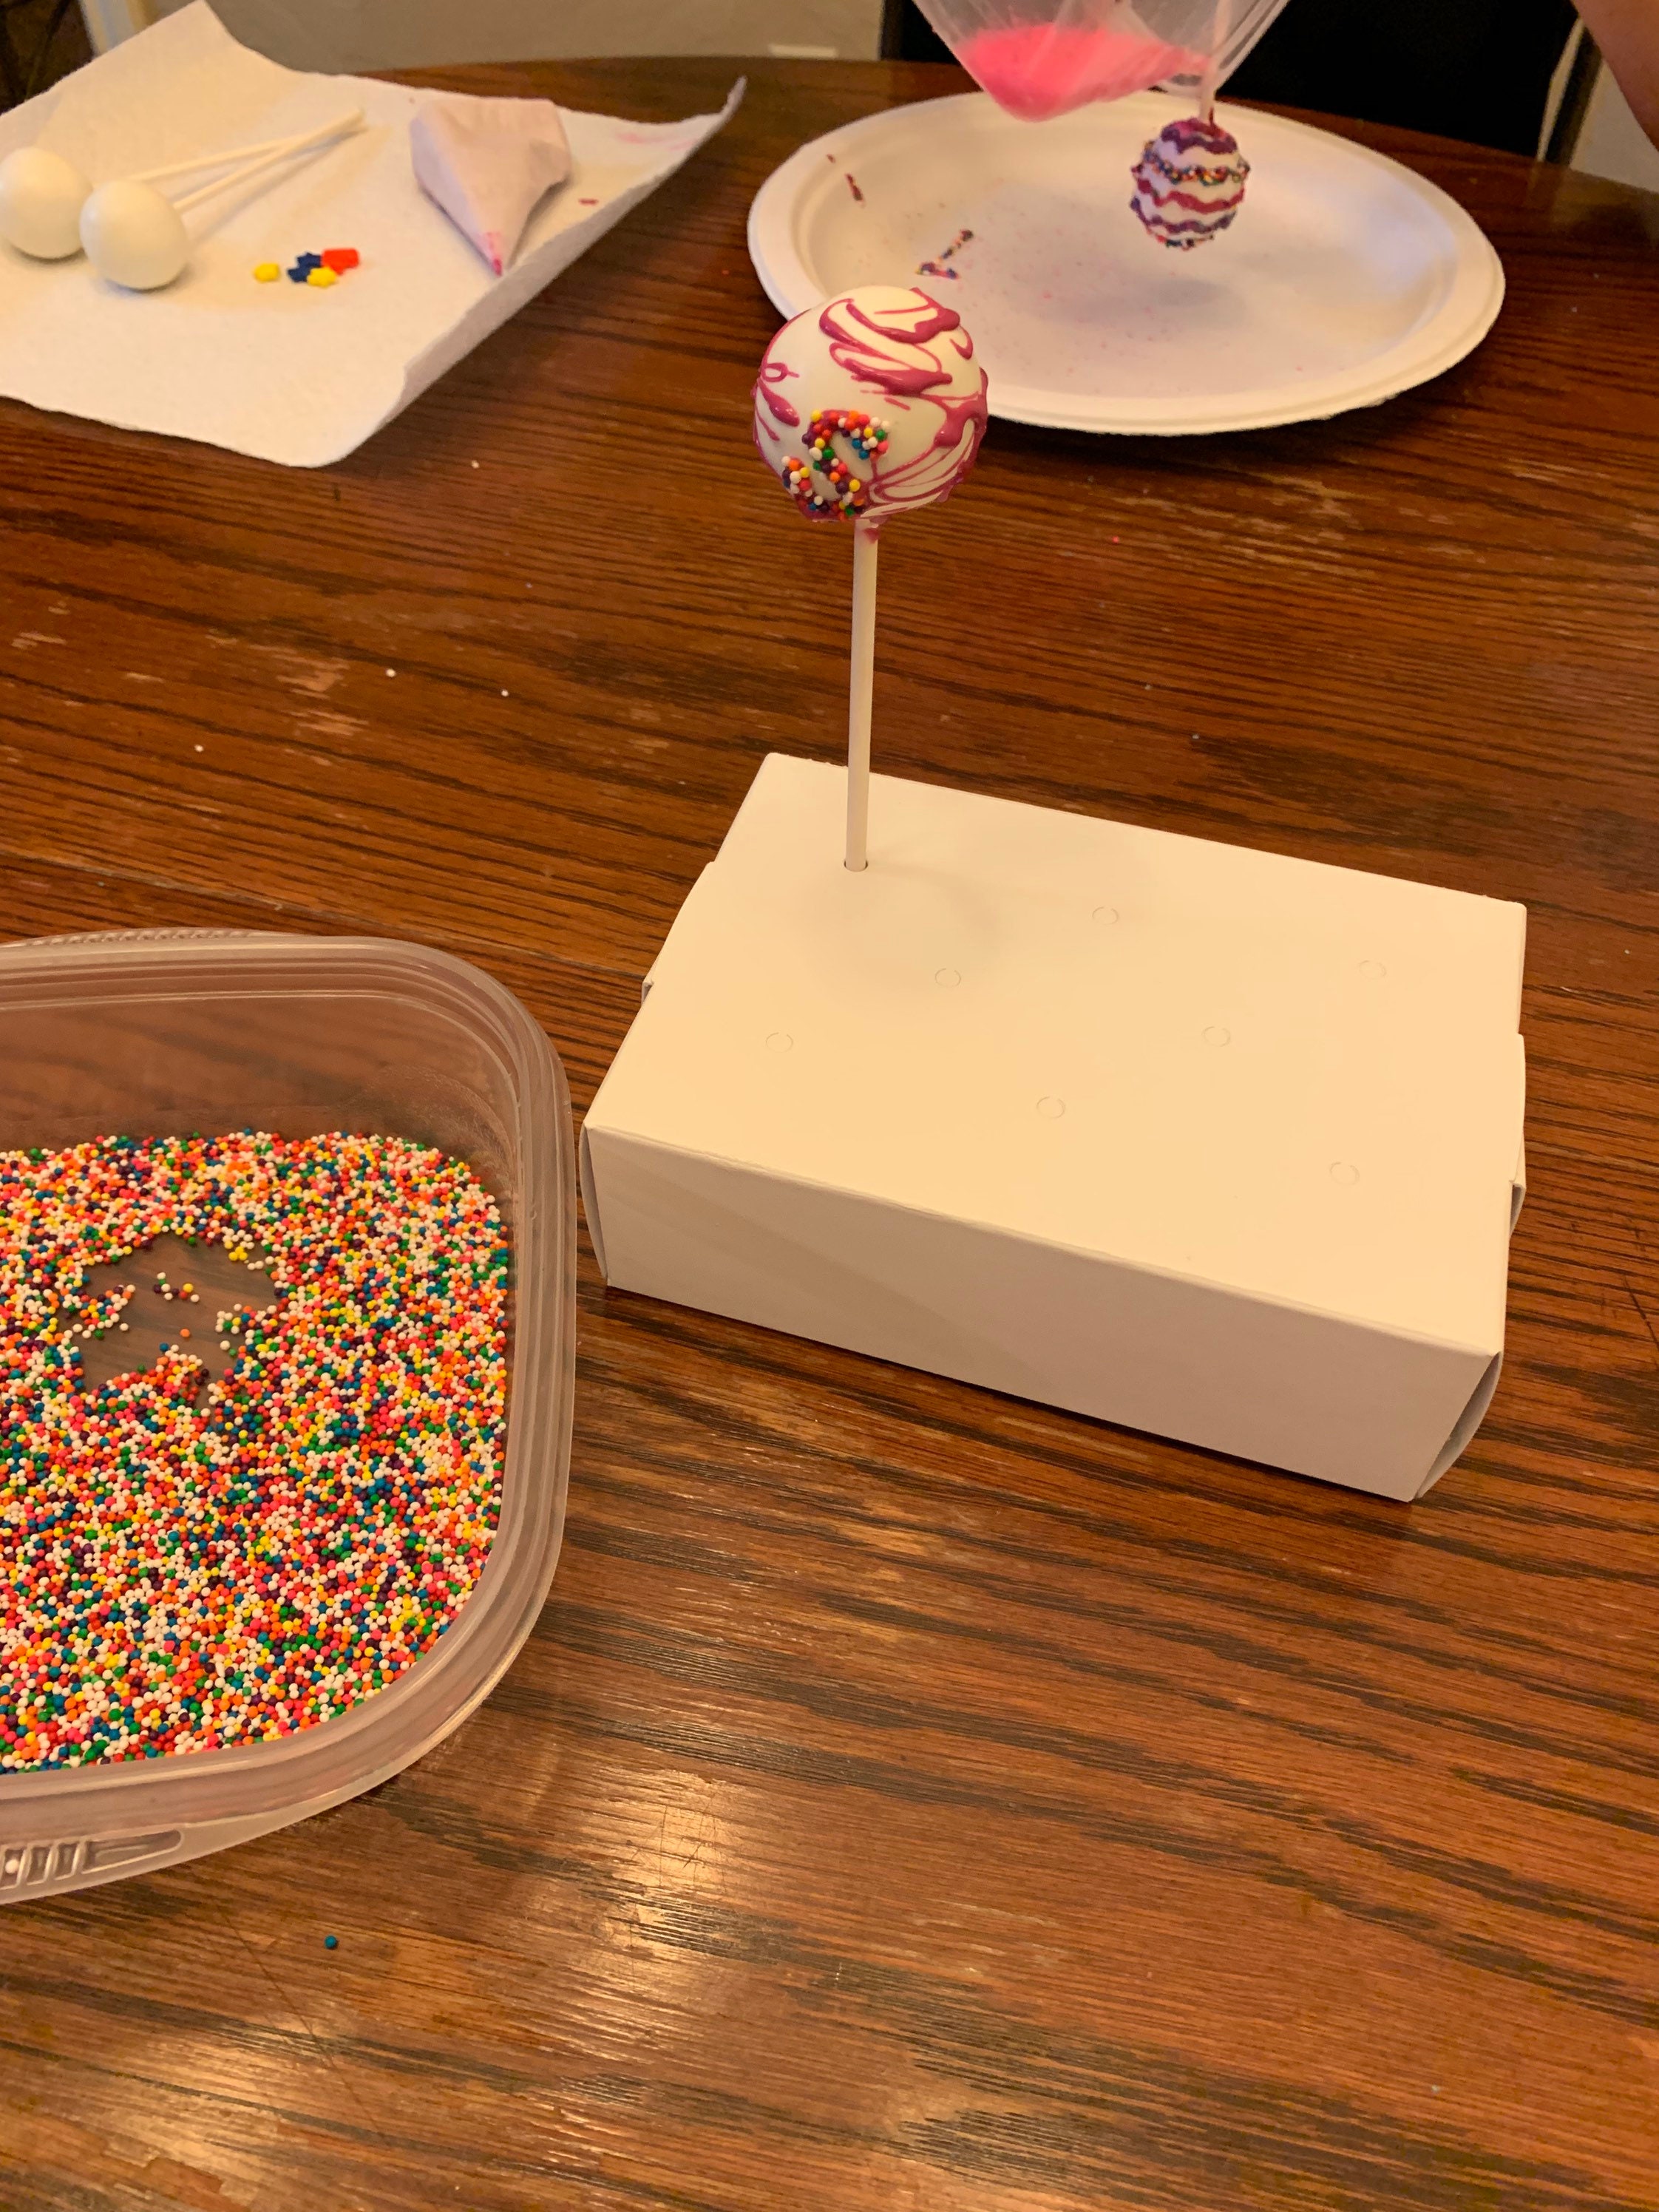 DIY cake pop decorating kit